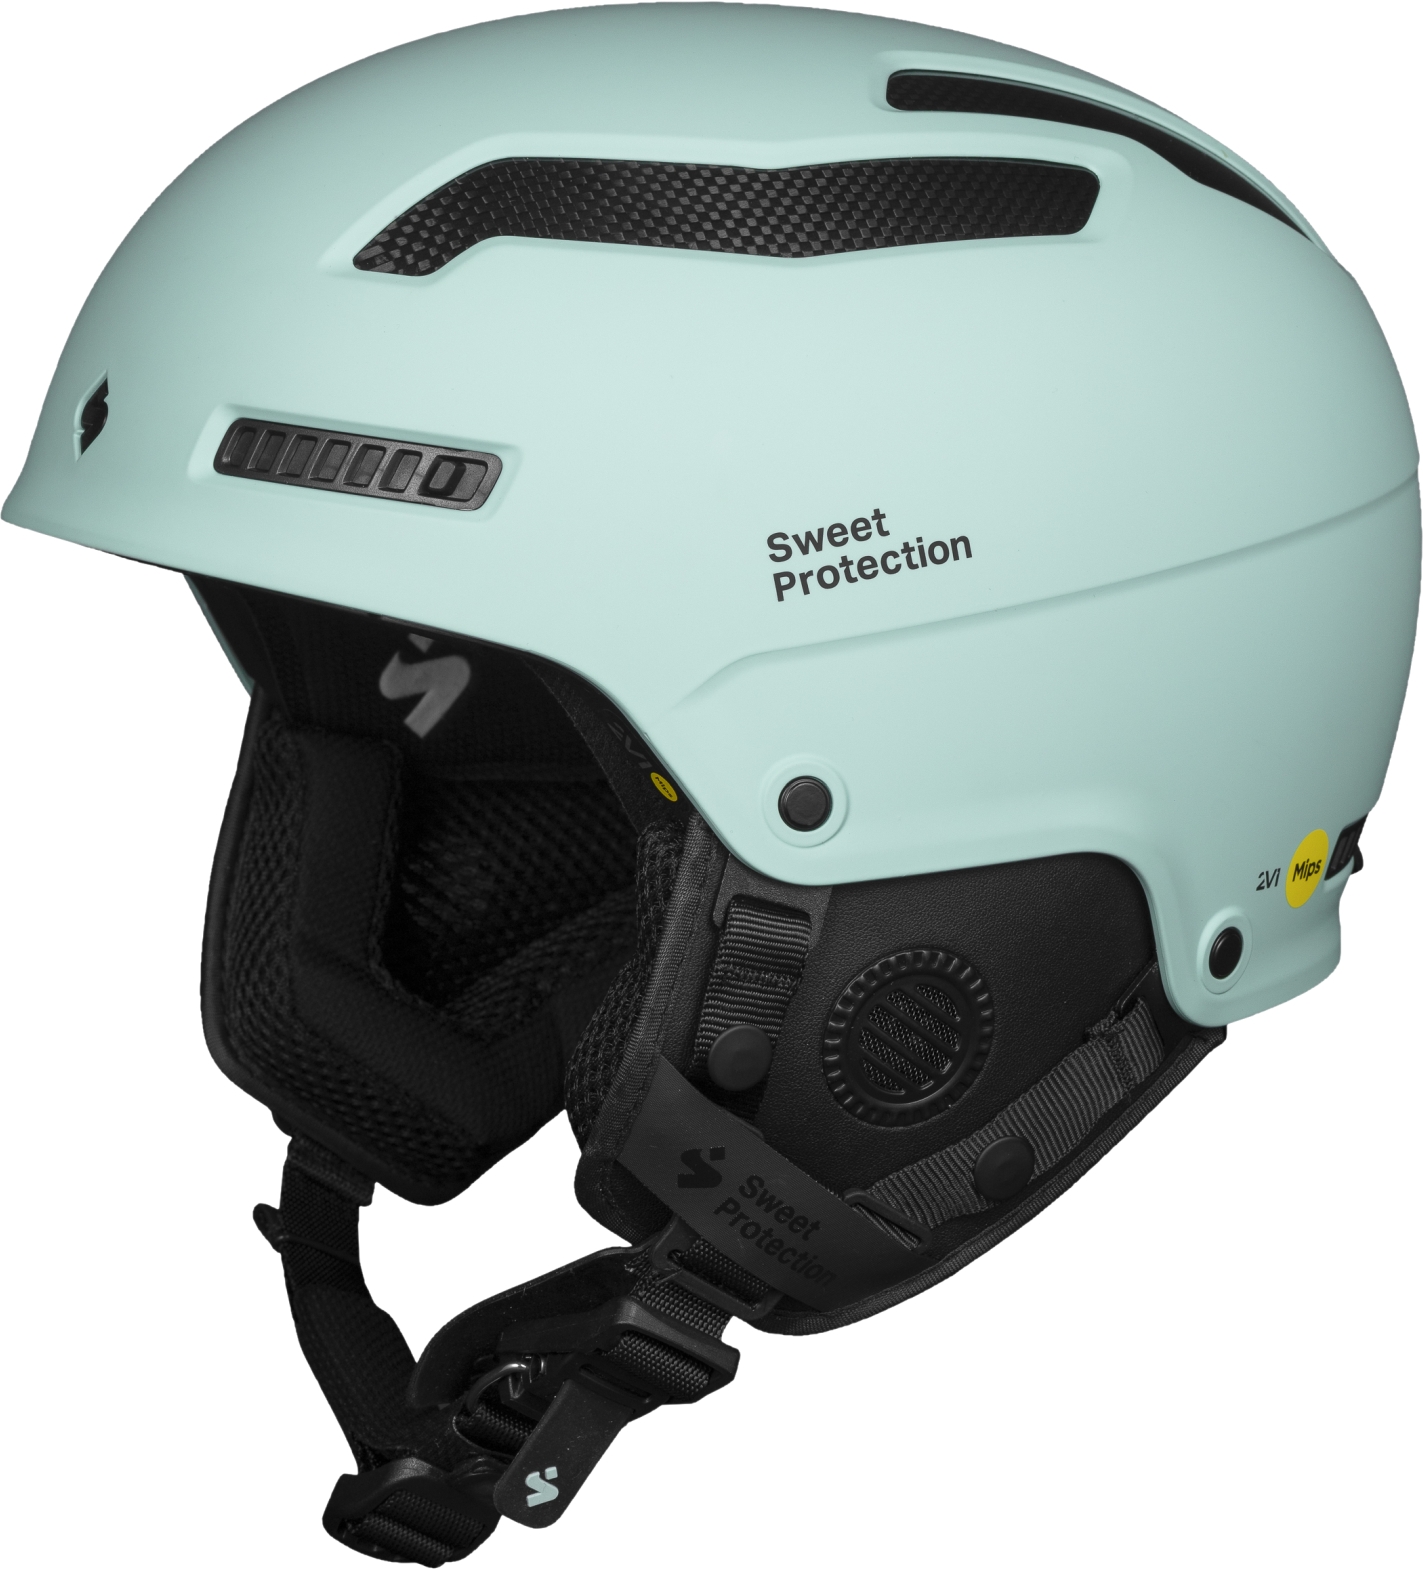 E-shop Sweet Protection Trooper 2Vi MIPS Helmet - Misty Turquoise 53-56